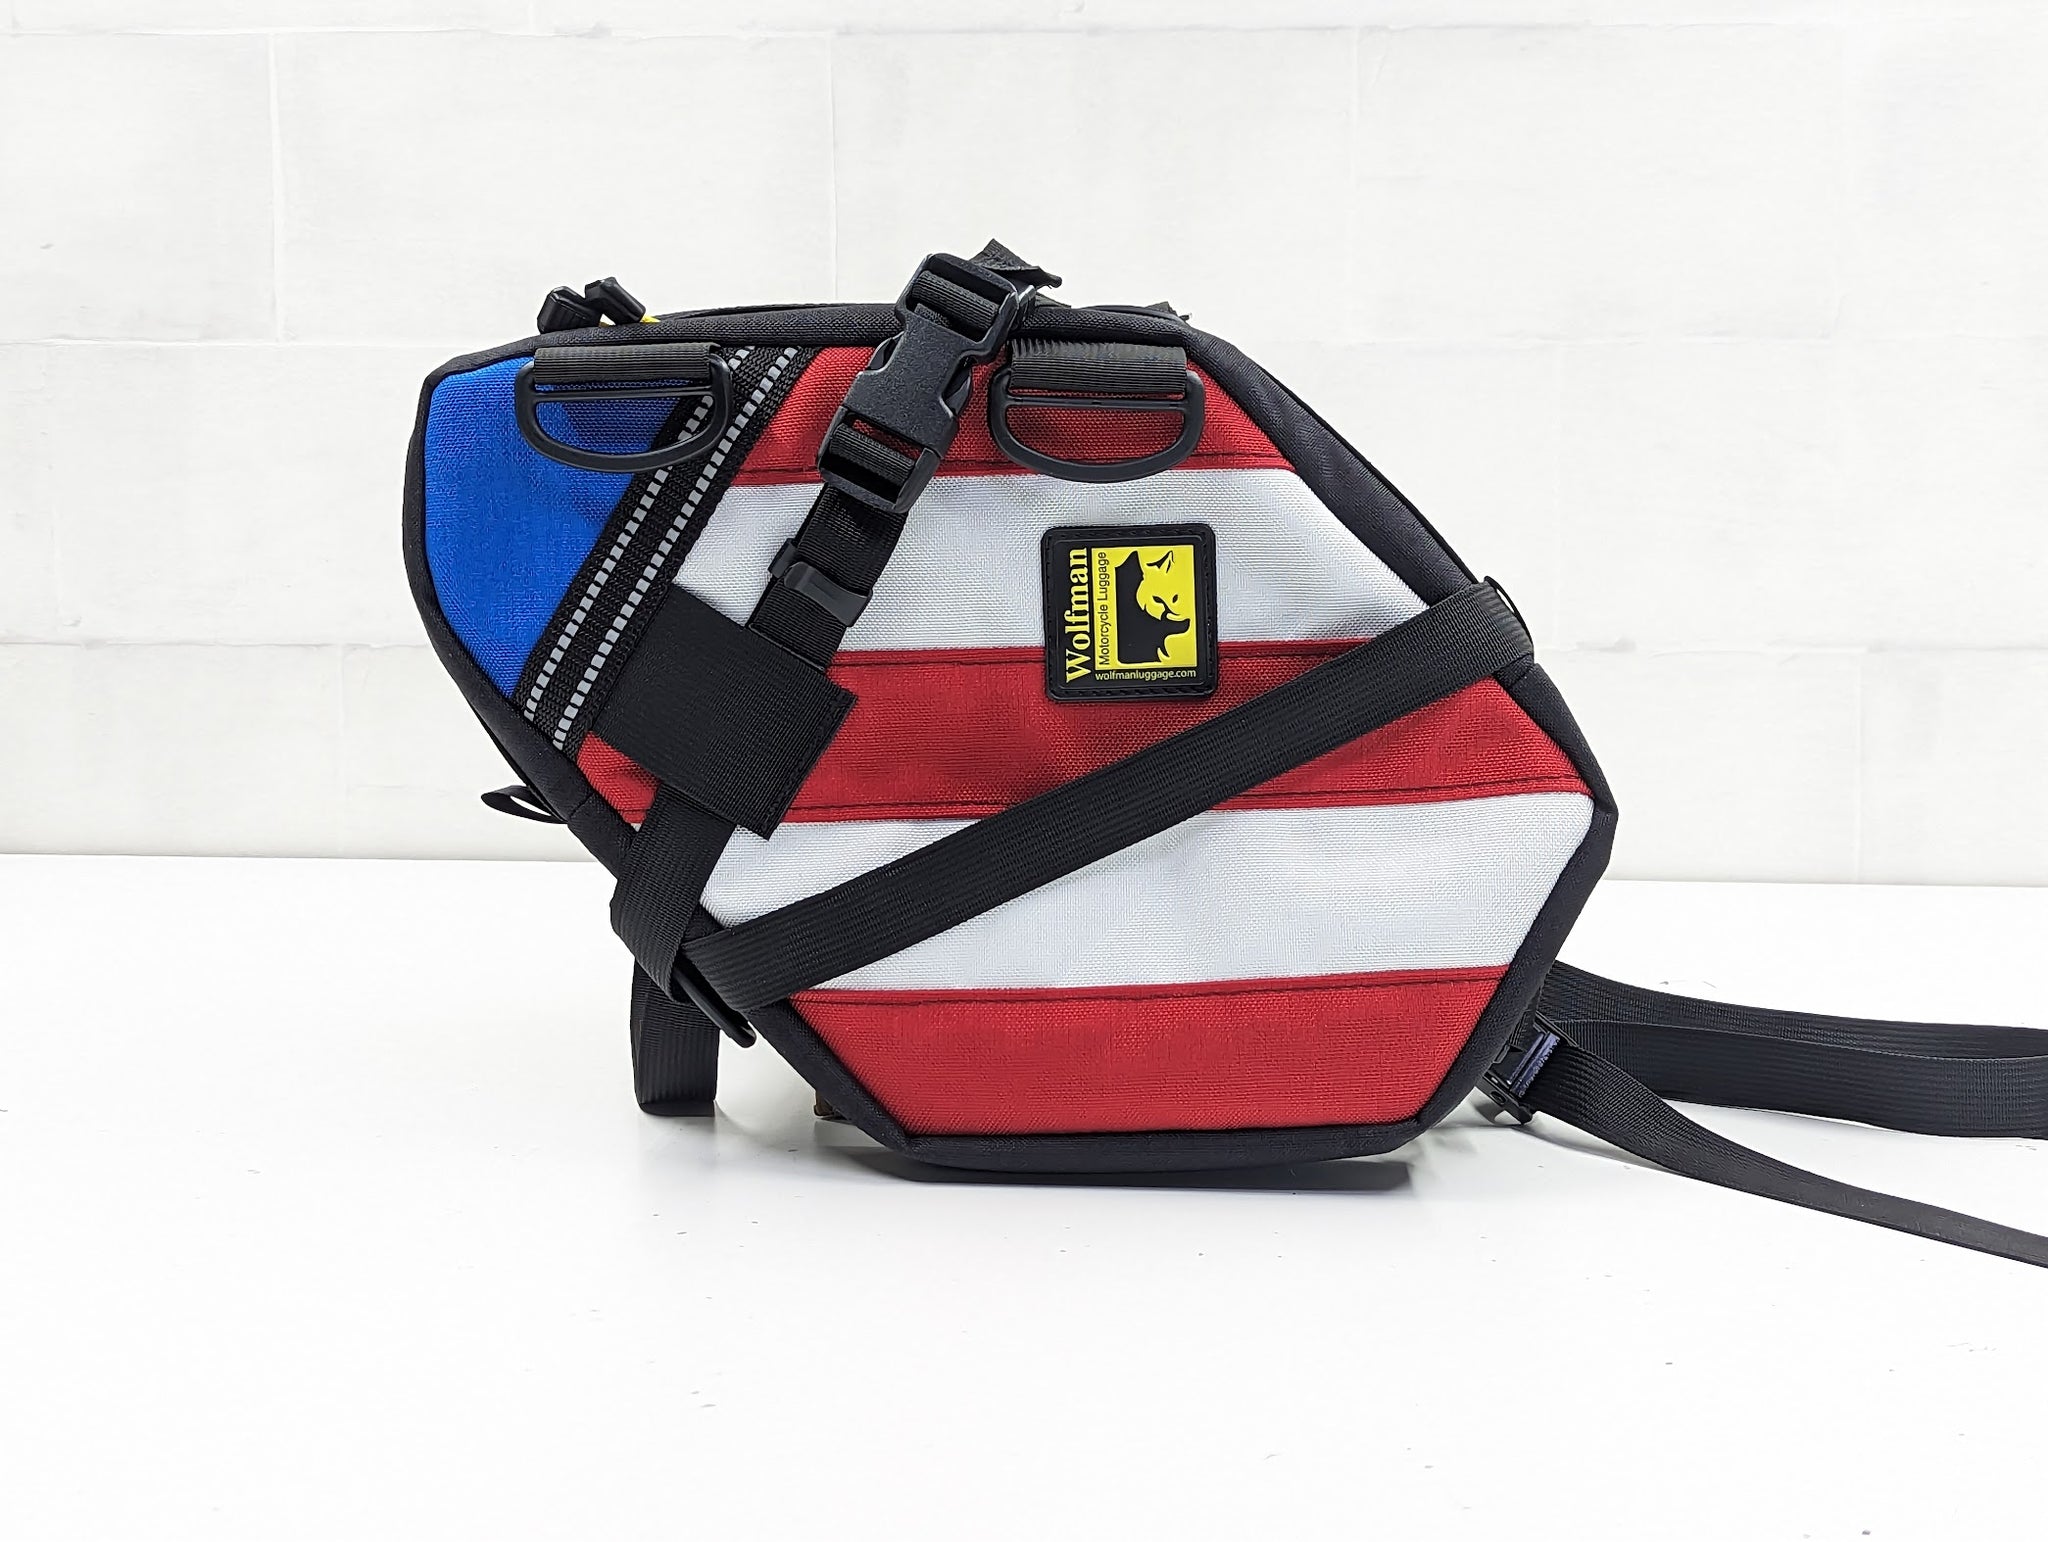 Enduro Daytripper Saddle Bags - Motorcycle Luggage by Wolfman 